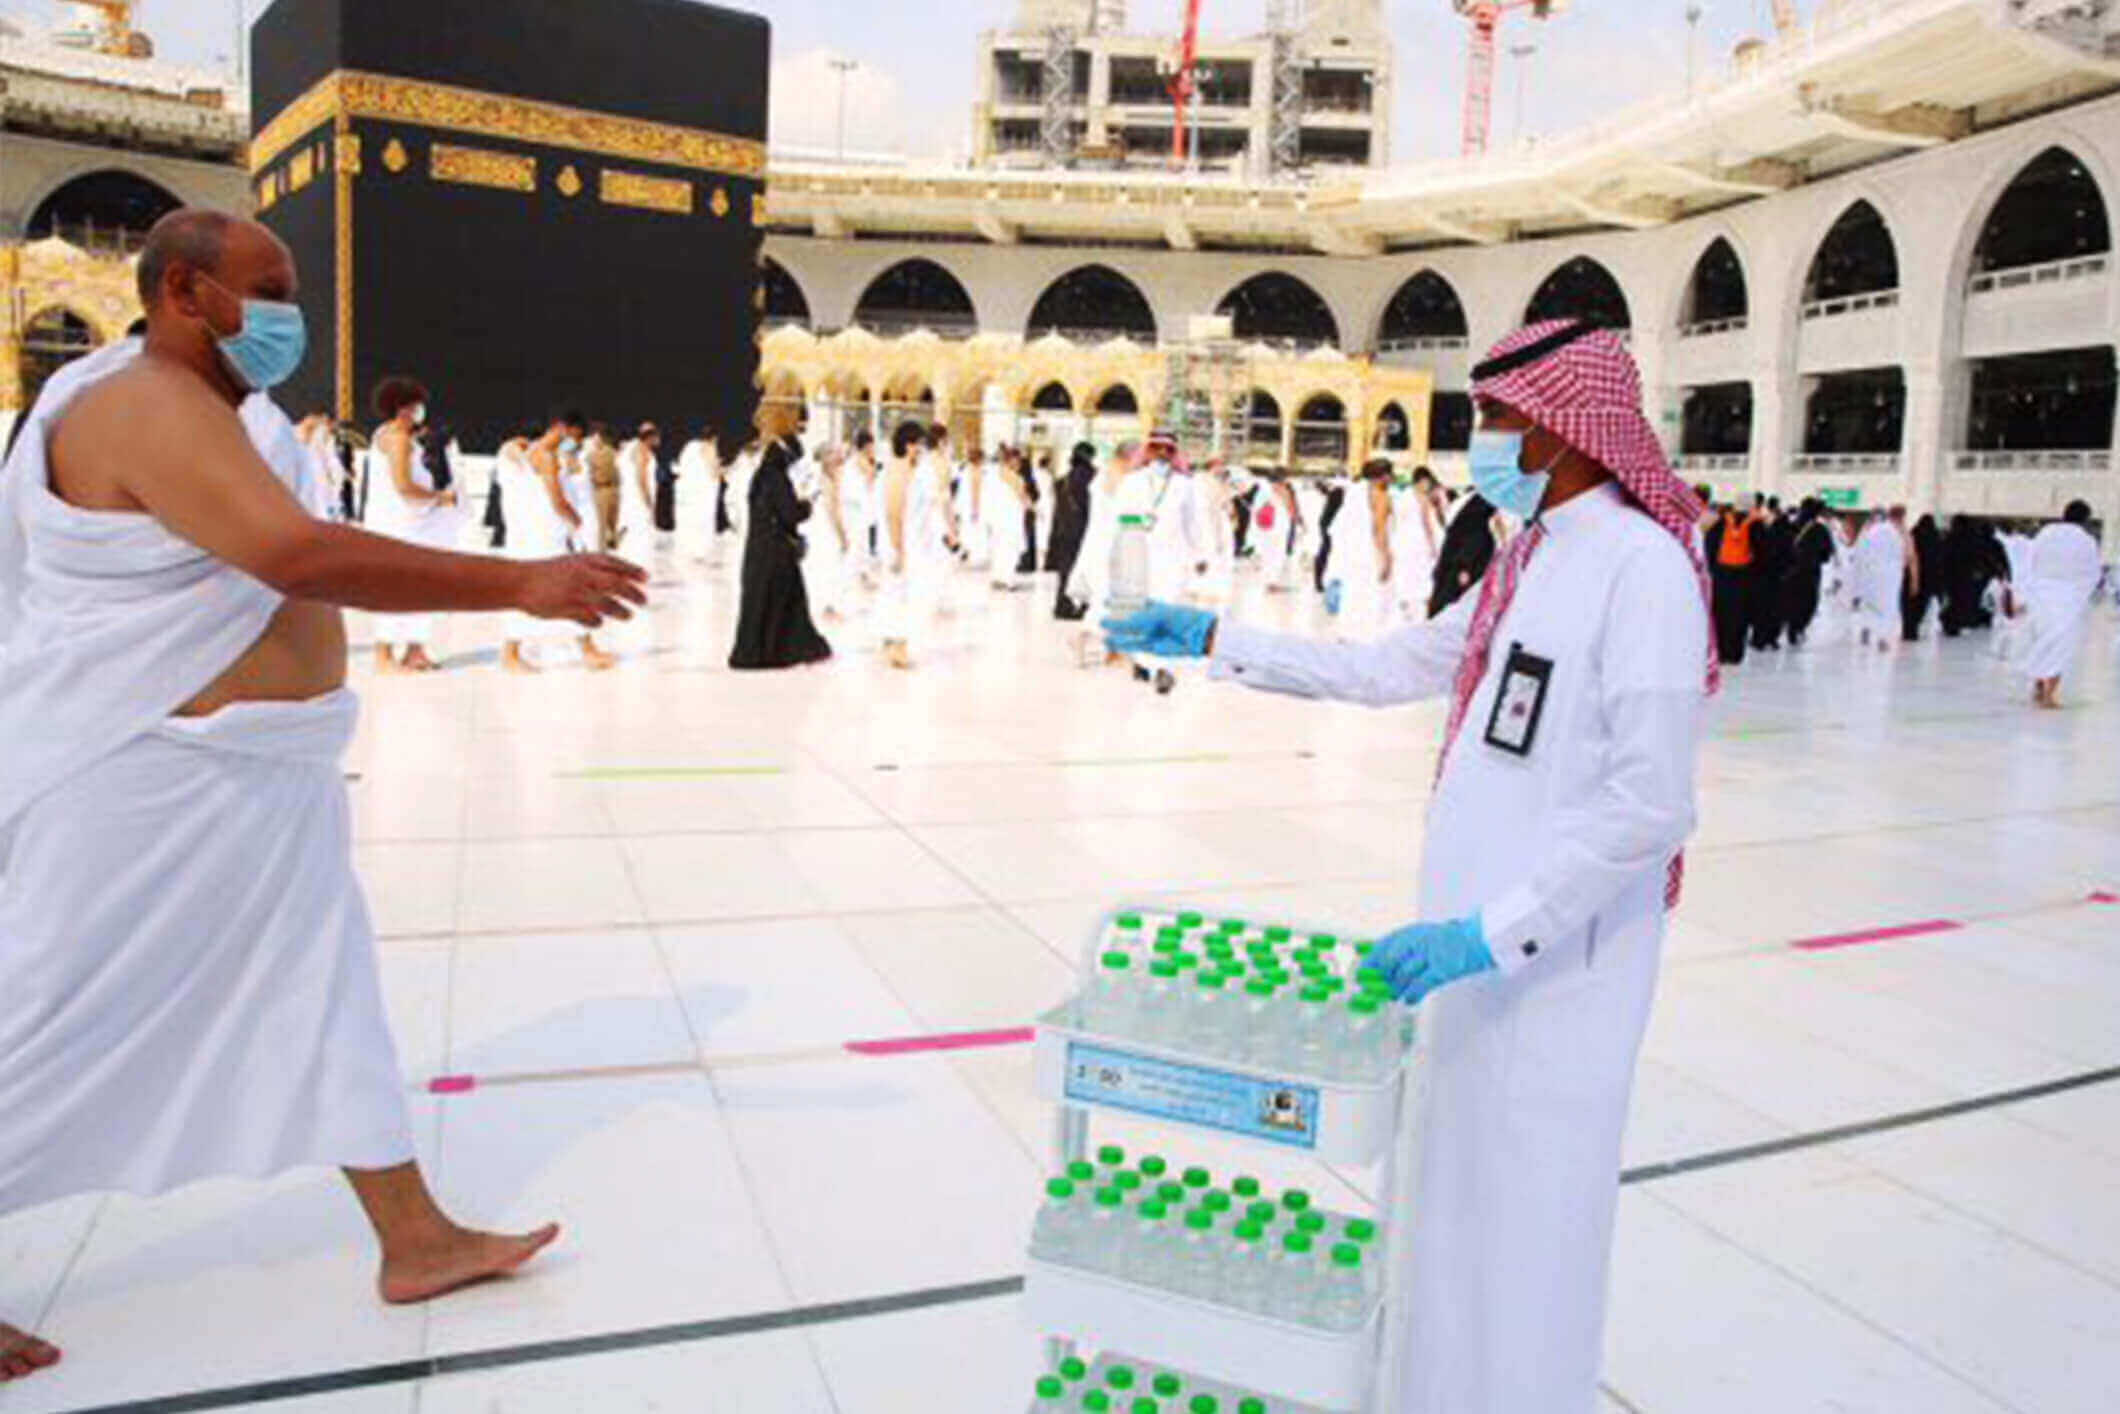 Grand Mosque Gives Hajj Pilgrims 12M Liters of Zamzam Water